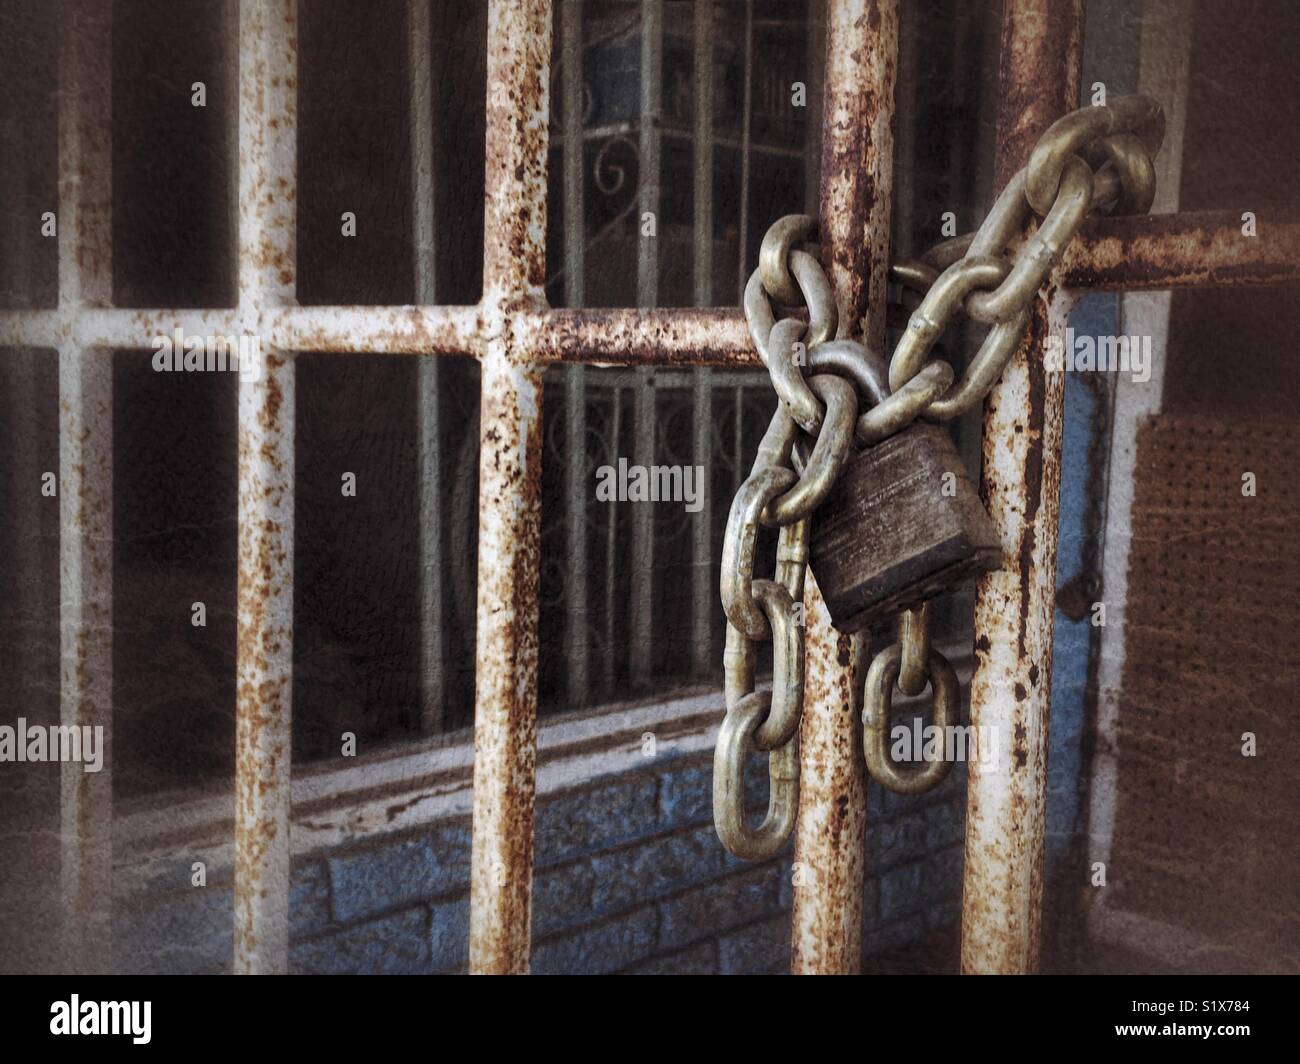 Lock, chains and bars Stock Photo